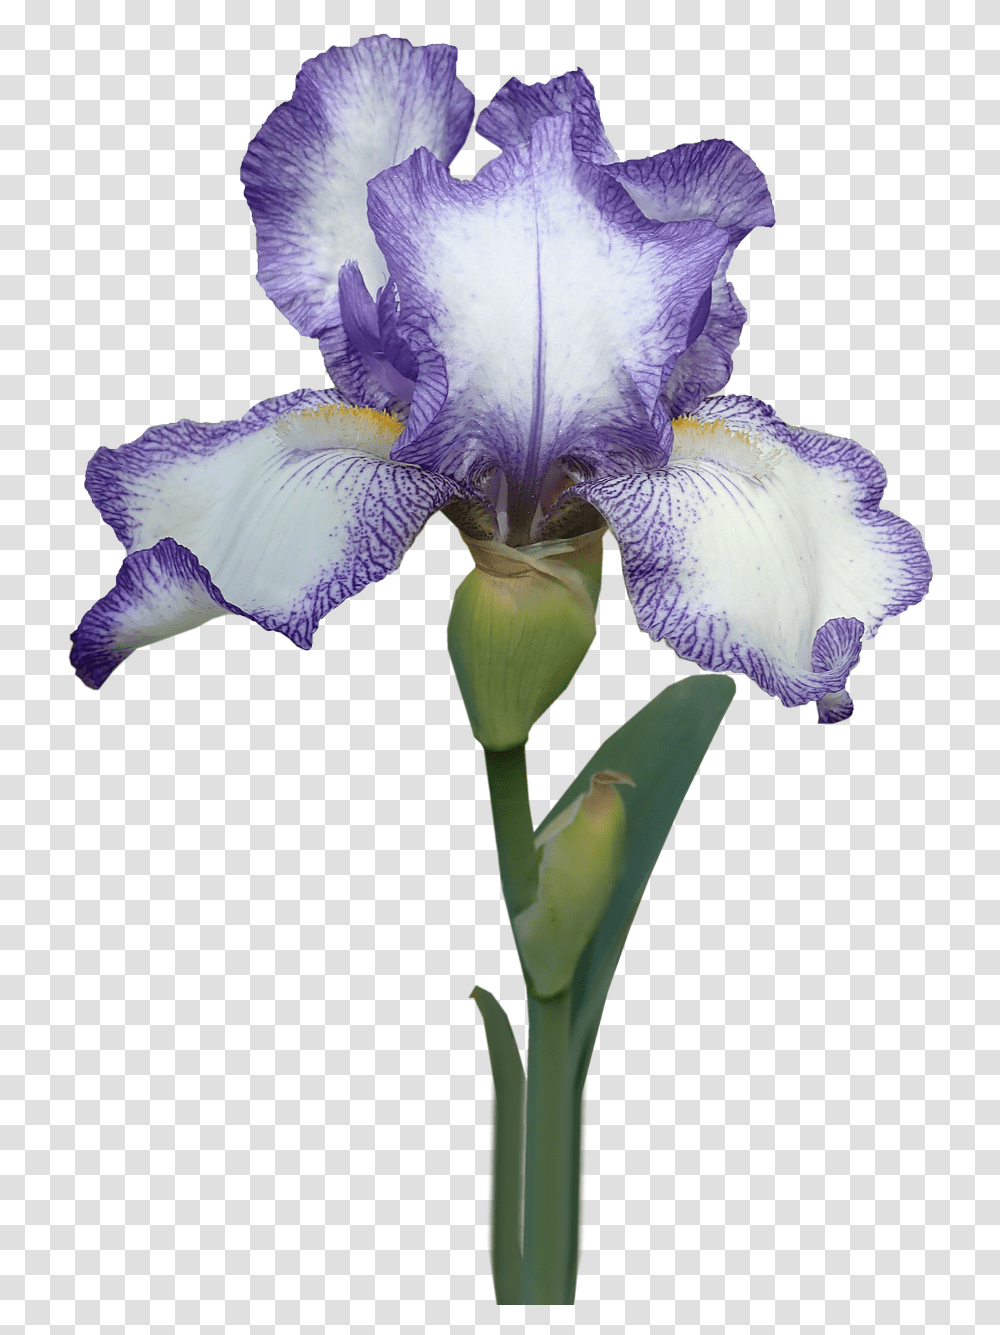 Flower Iris Stem Free Photo On Pixabay Iris Flower With Stem, Plant, Bird, Animal, Petal Transparent Png